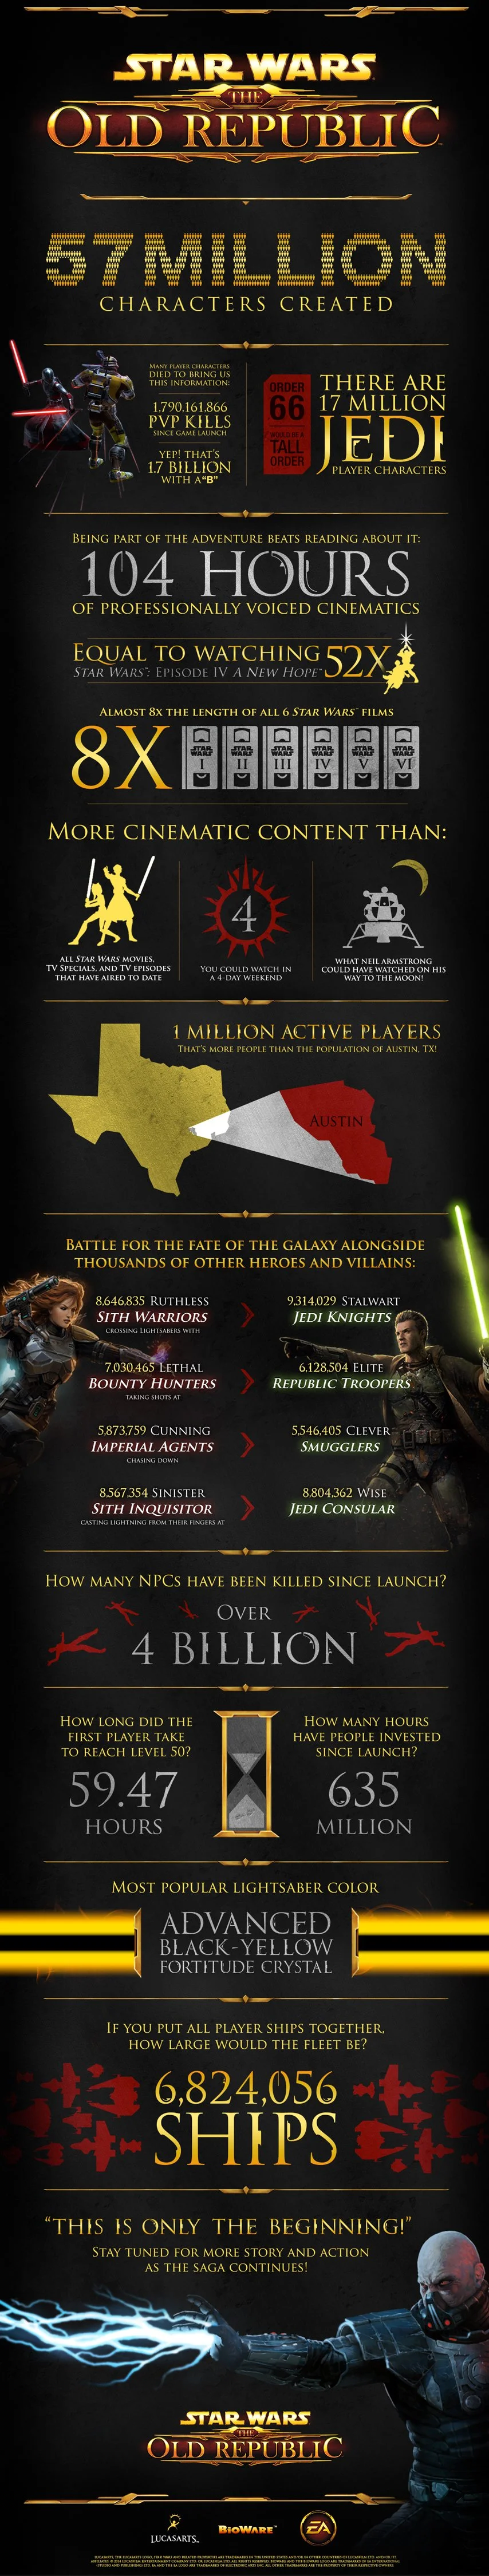 В Star Wars: The Old Republic поселилось 57 млн персонажей - фото 2